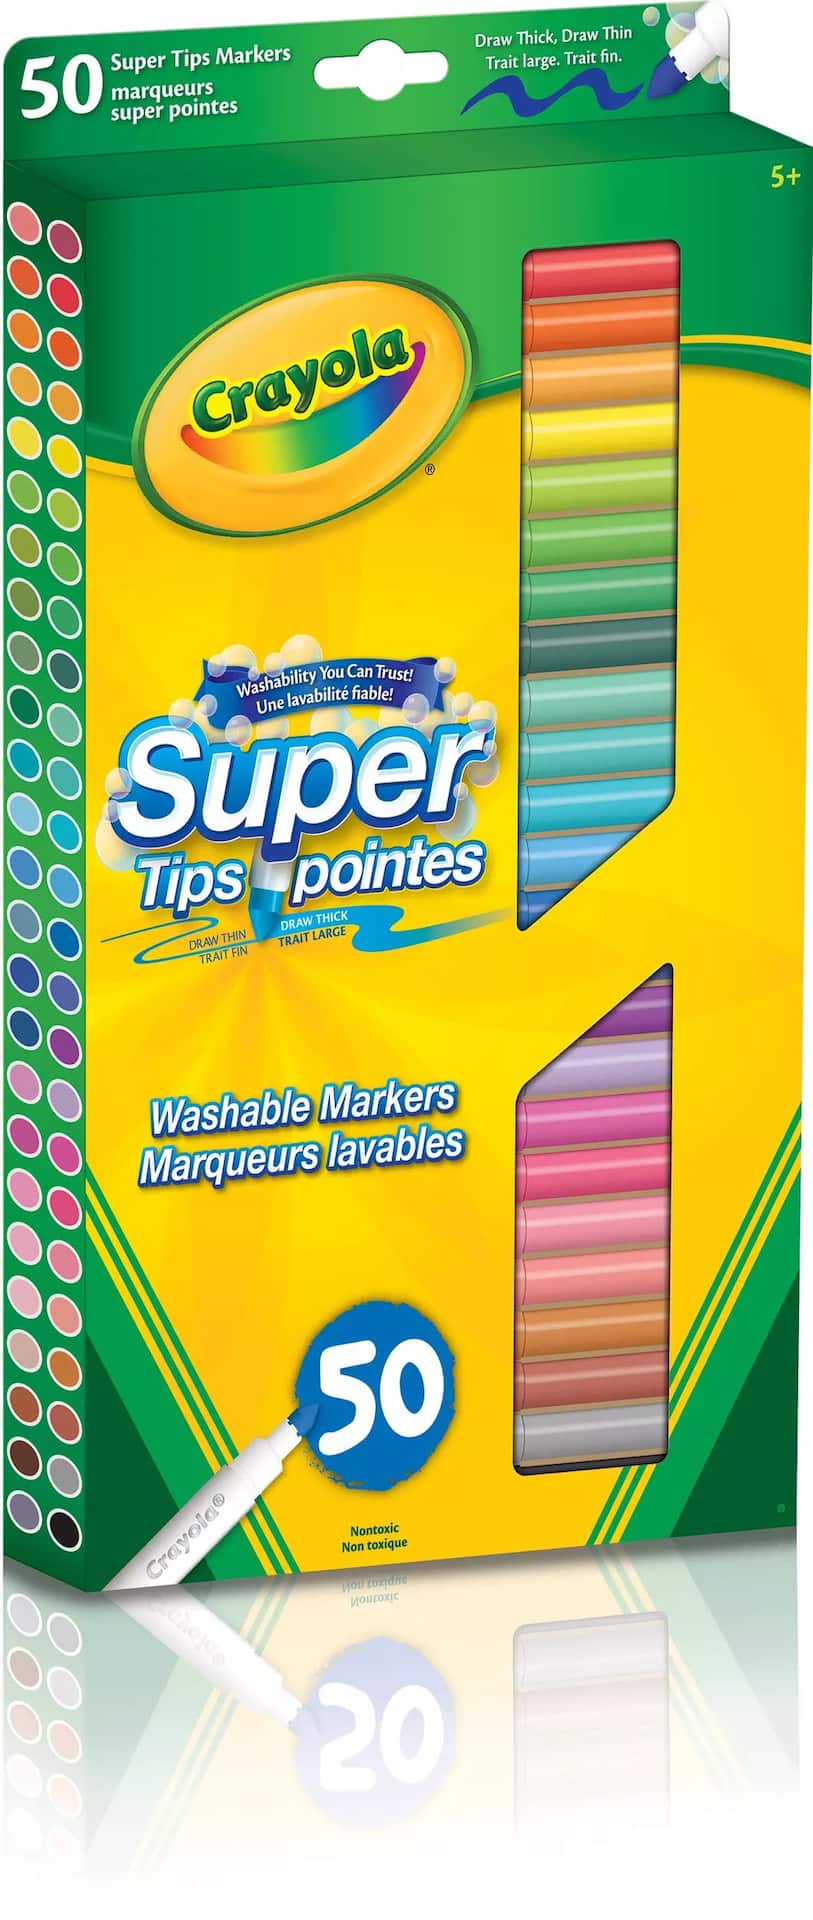 Marqueurs lavables Crayola Supertips, paq. 50